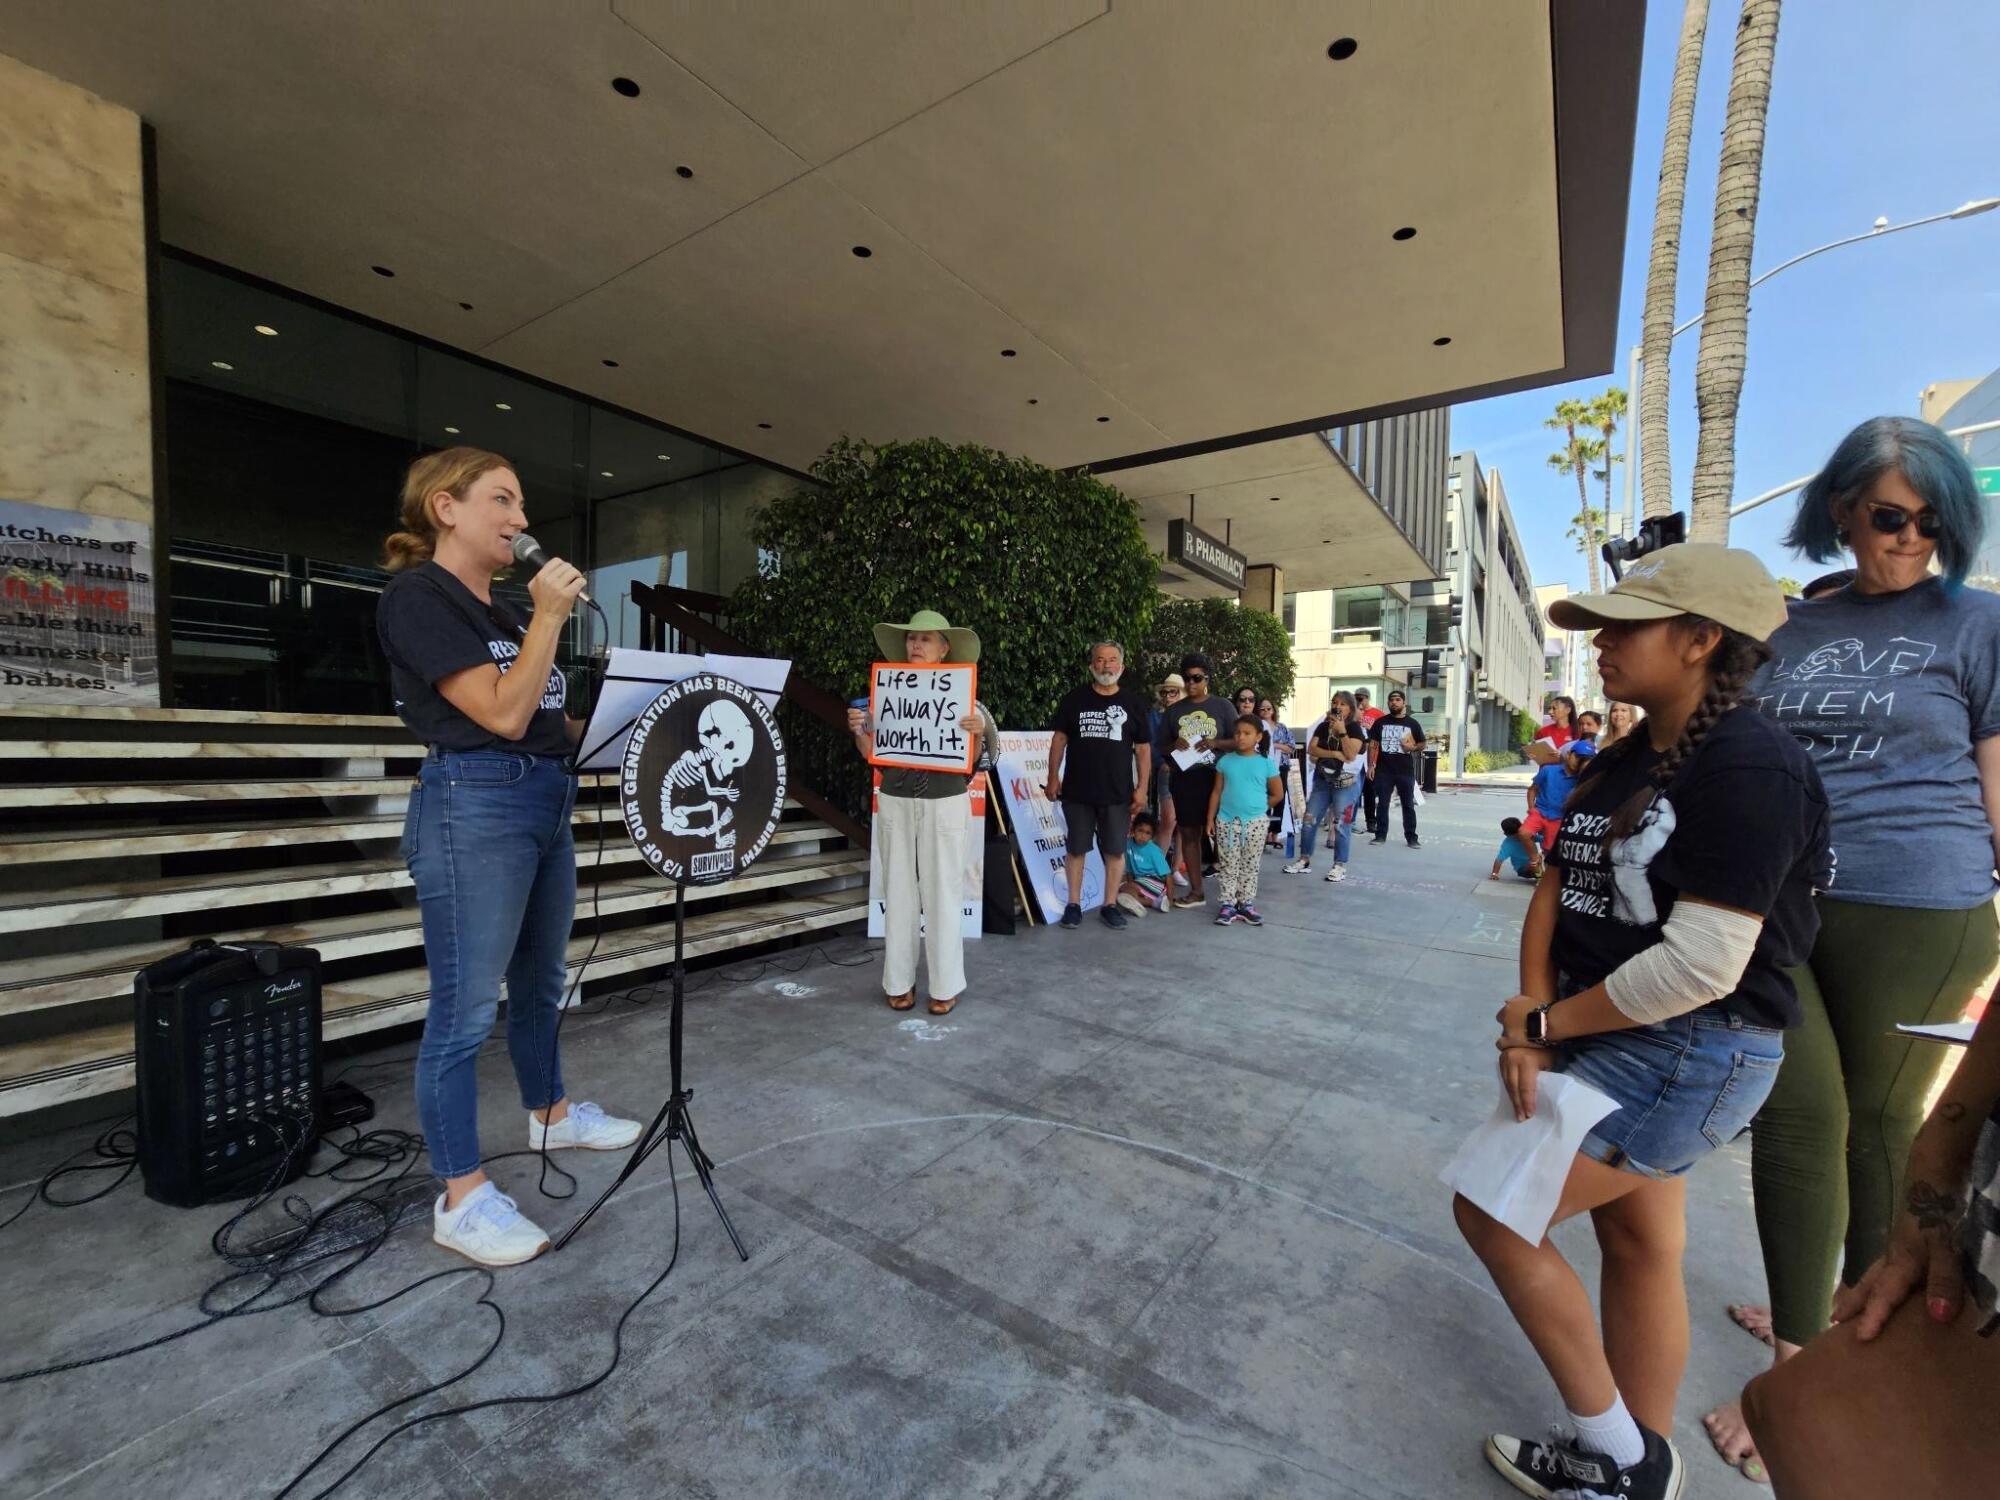 Bay Area art teacher Emma Craig addresses fellow antiabortion activists.